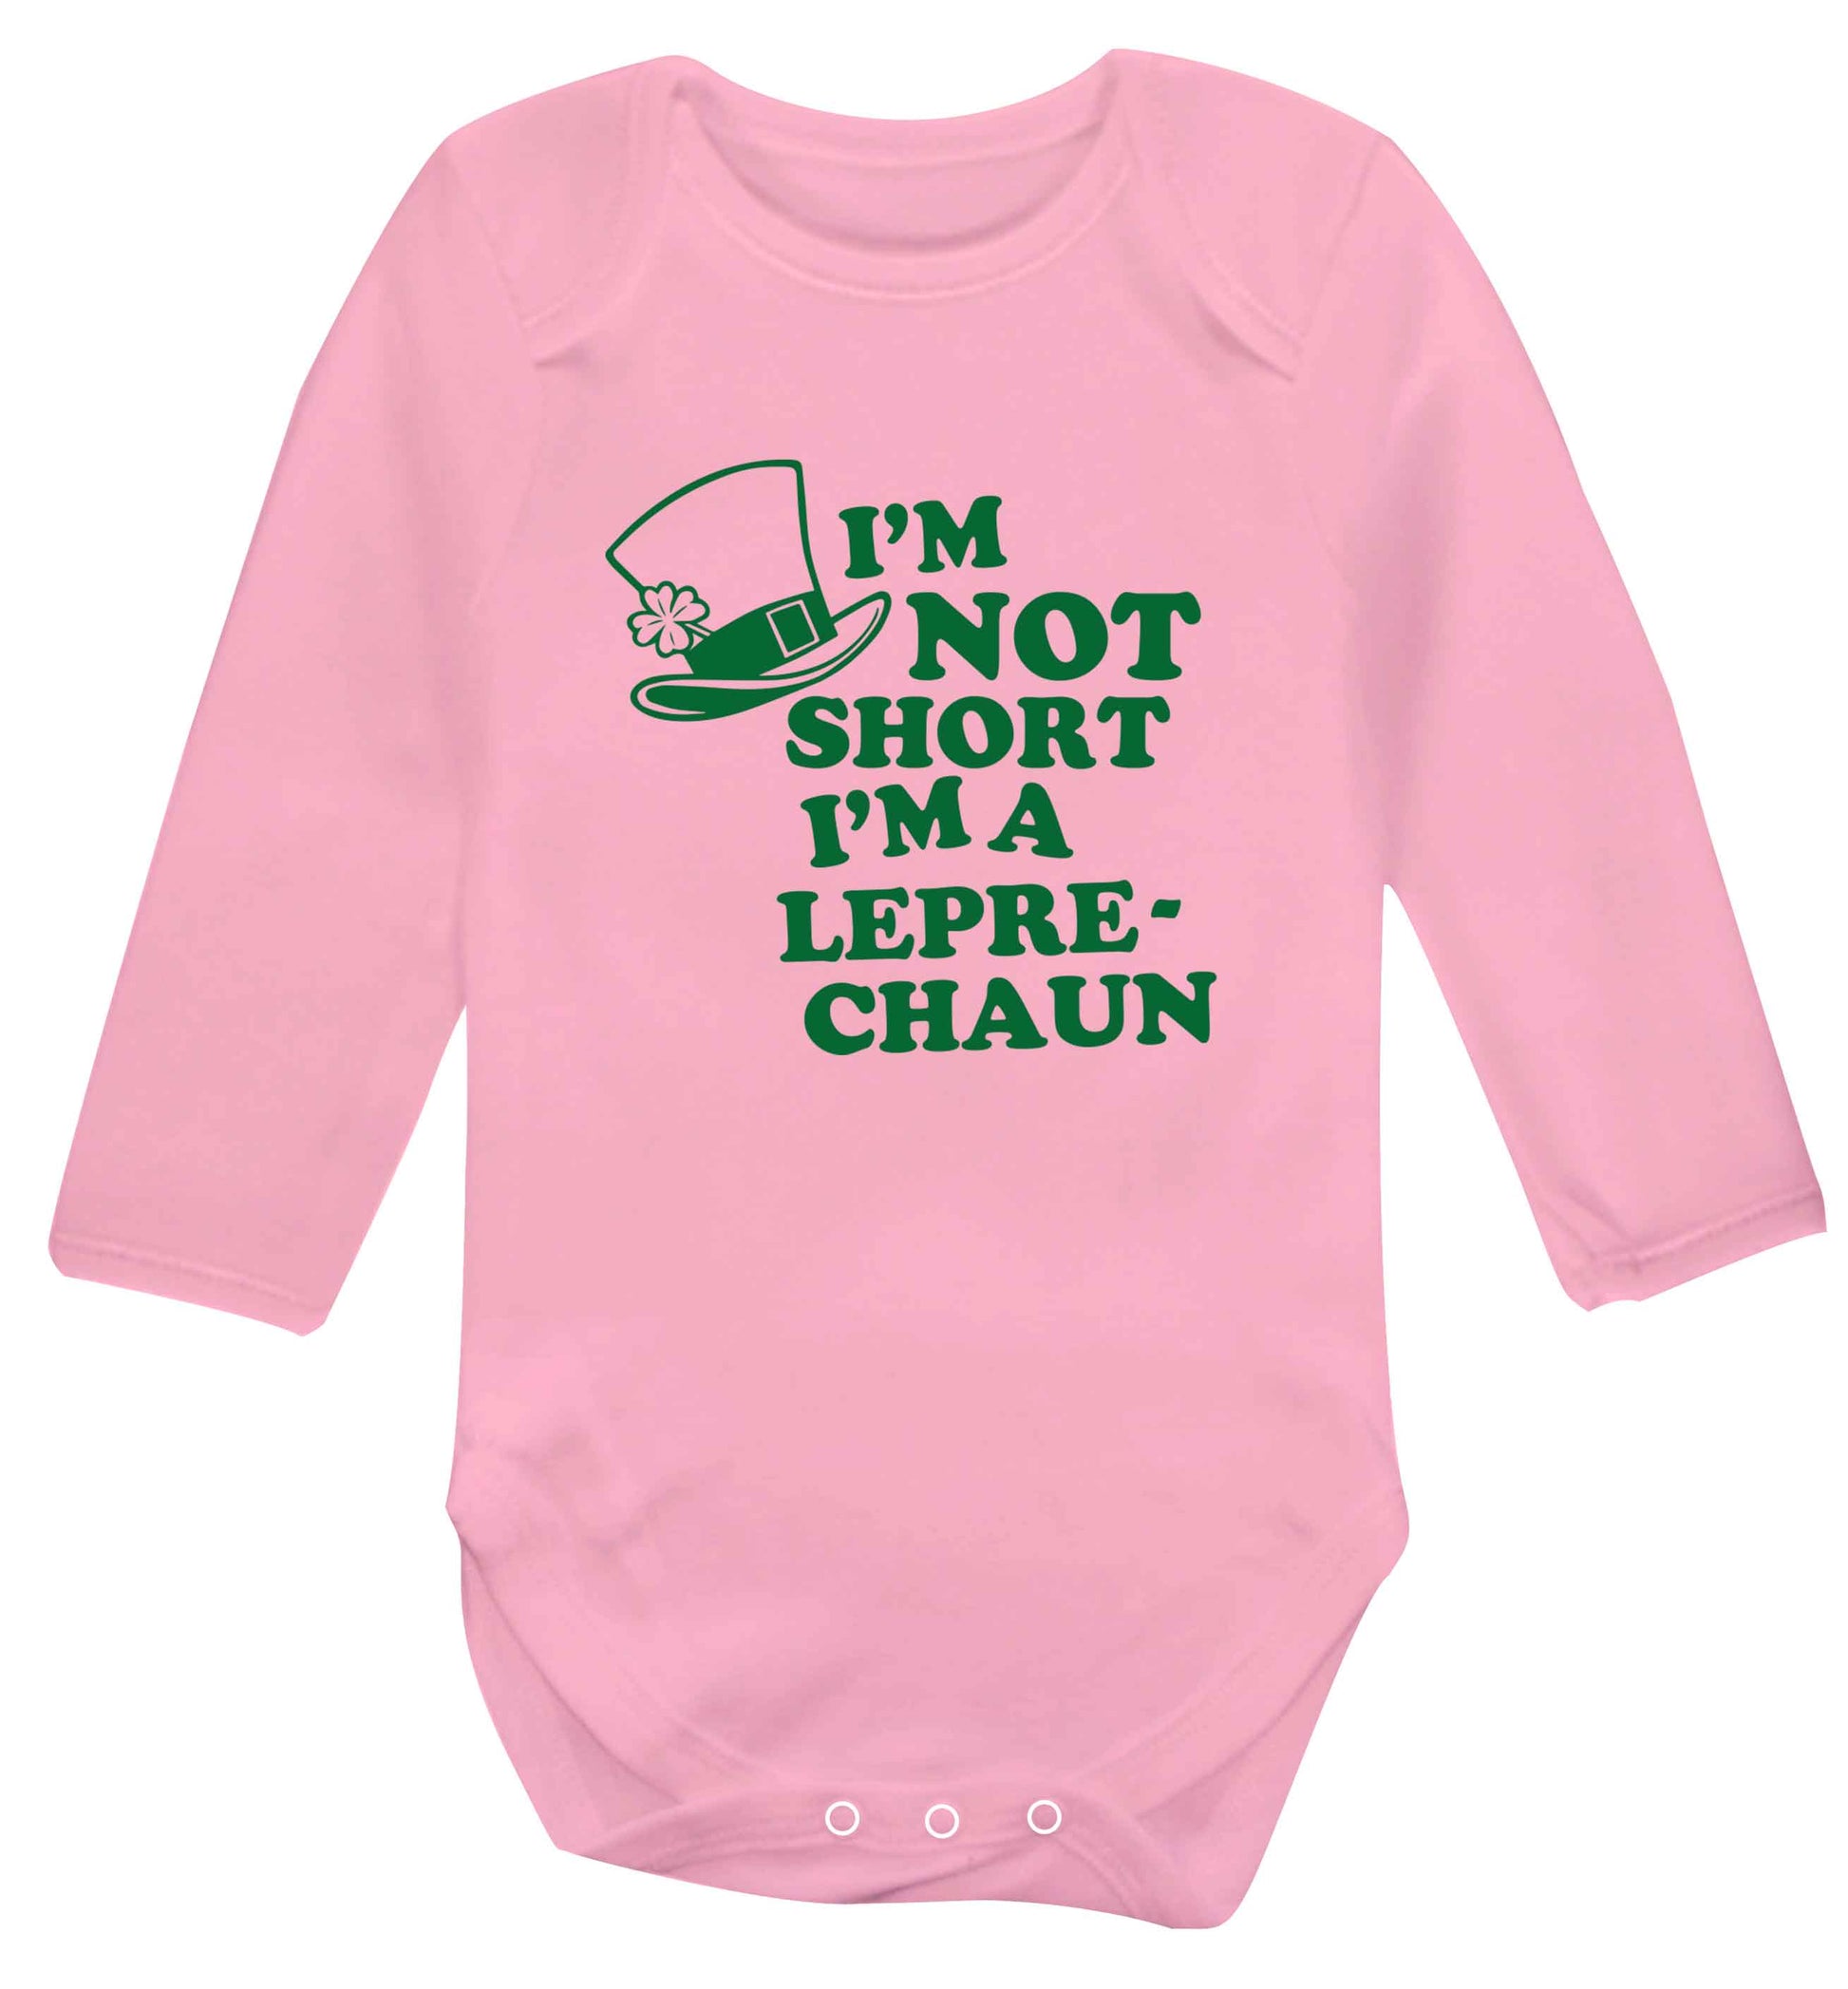 I'm not short I'm a leprechaun baby vest long sleeved pale pink 6-12 months